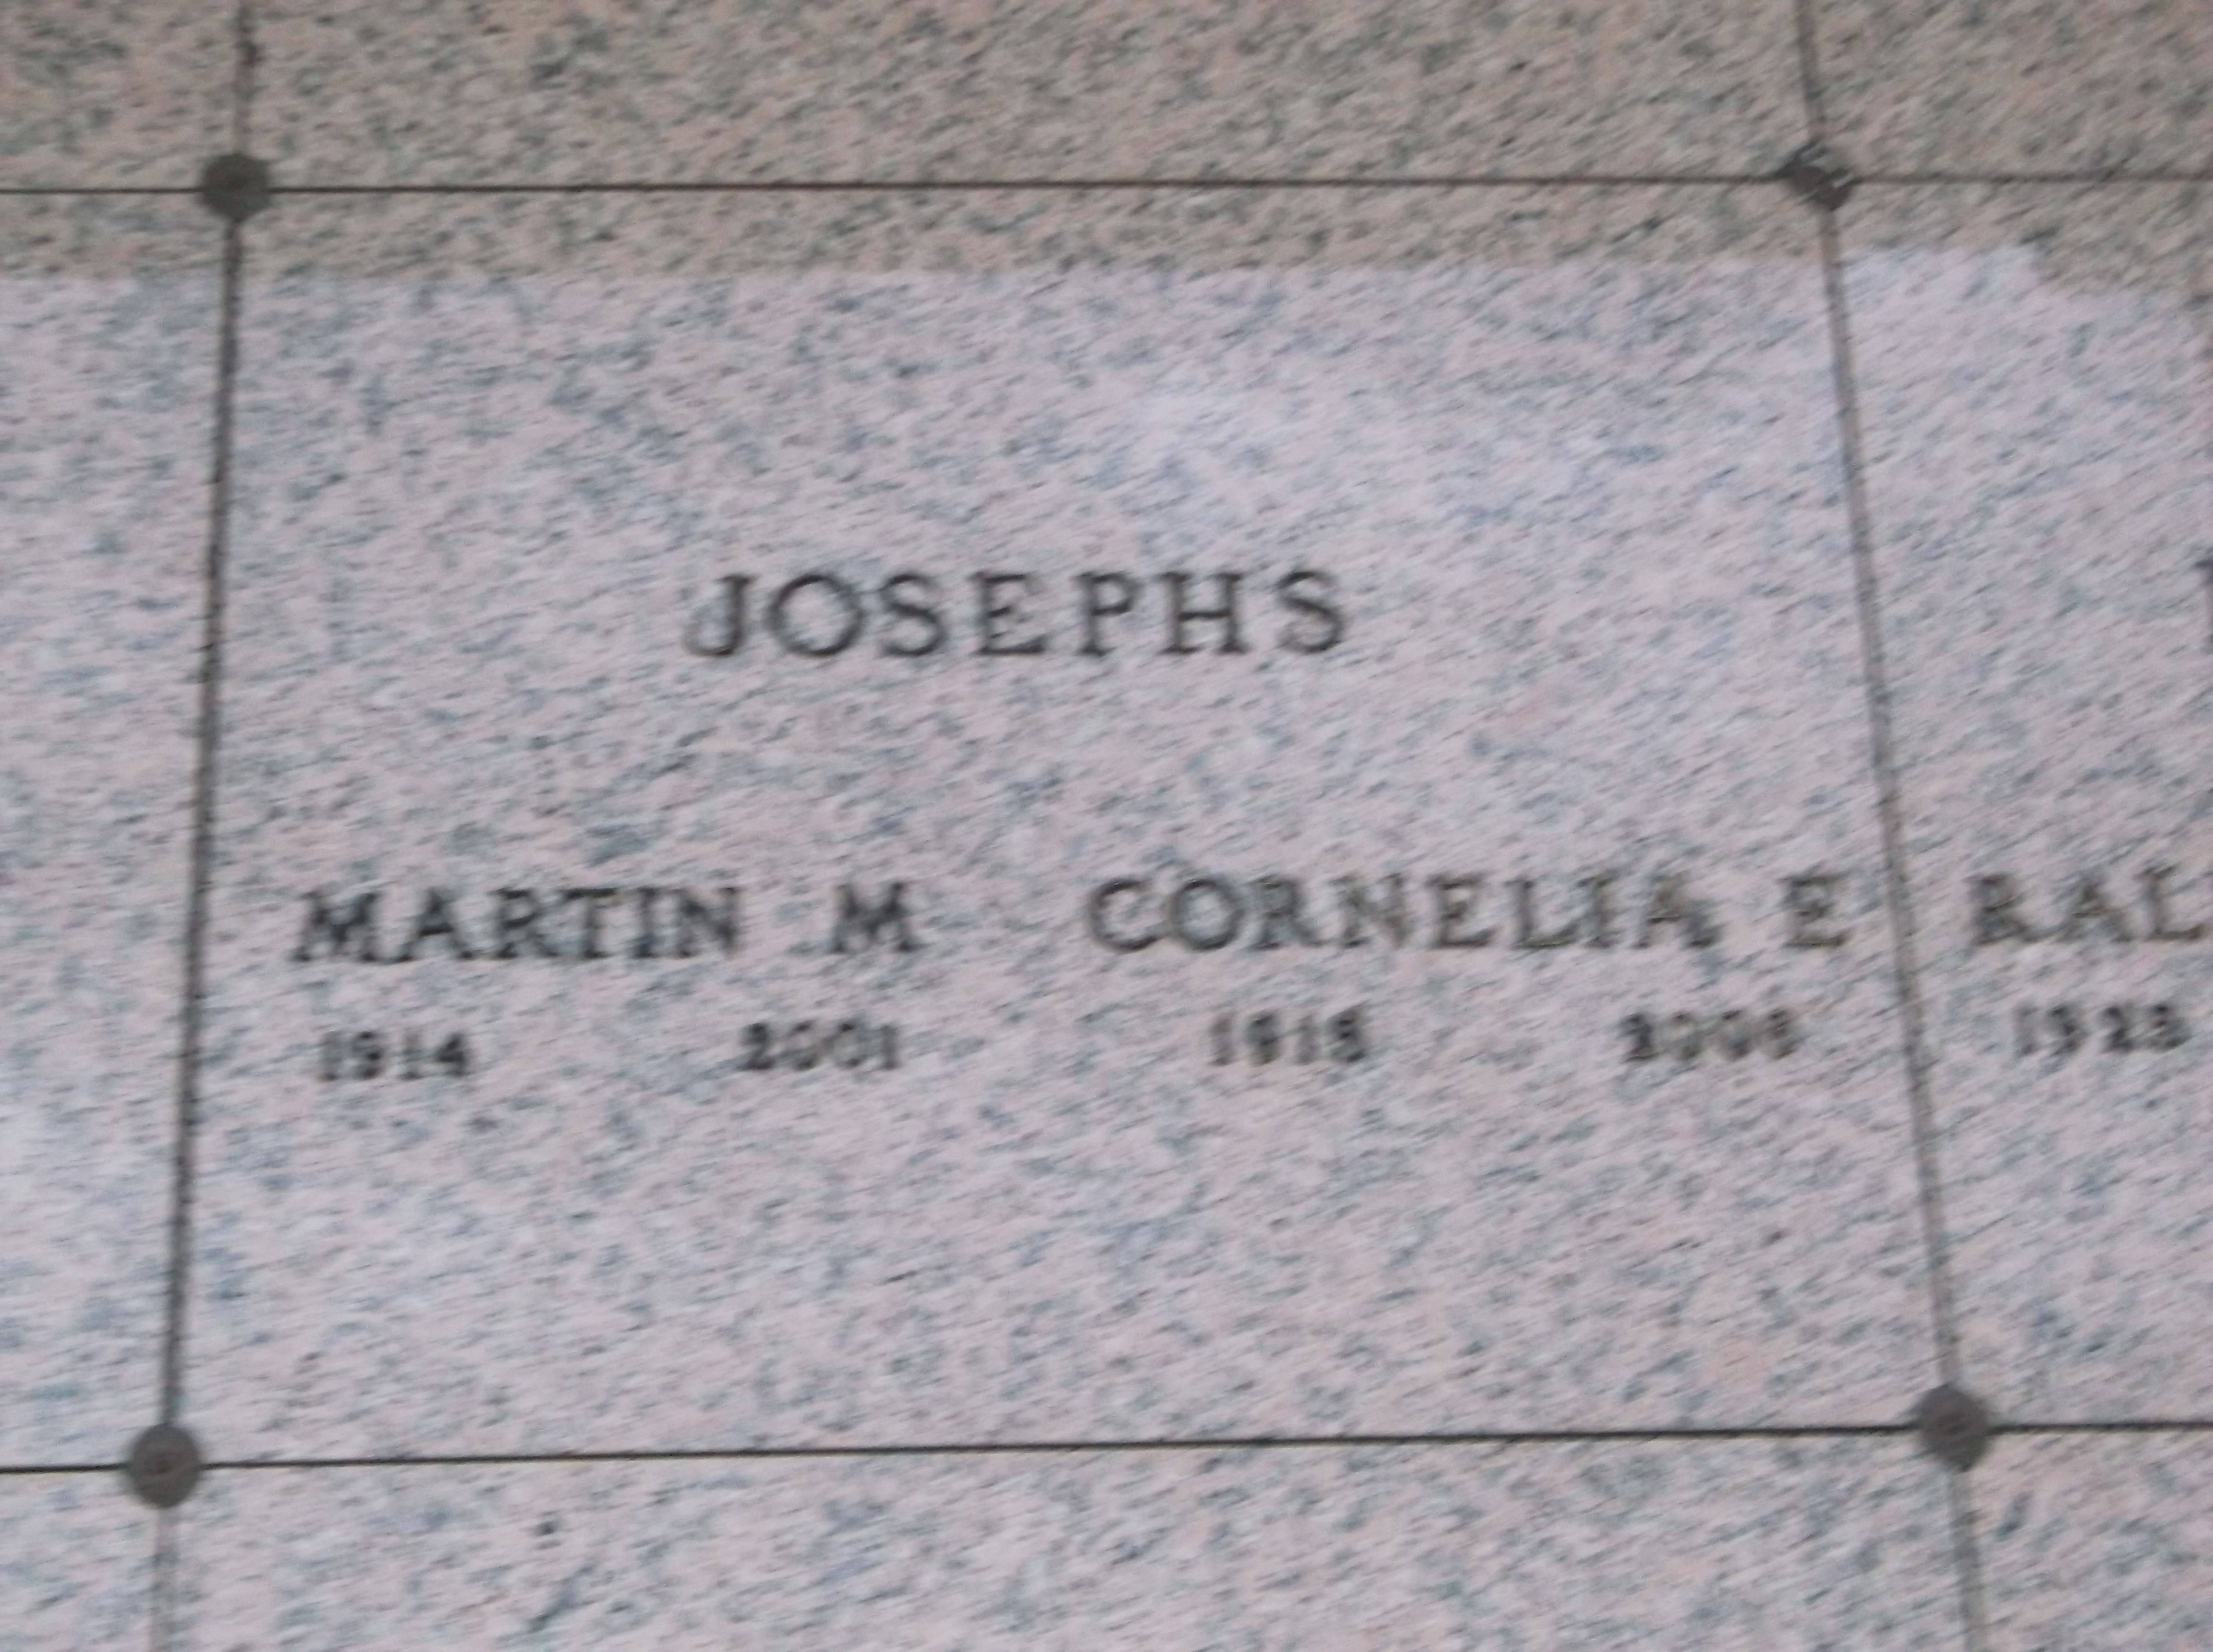 Cornelia E Josephs